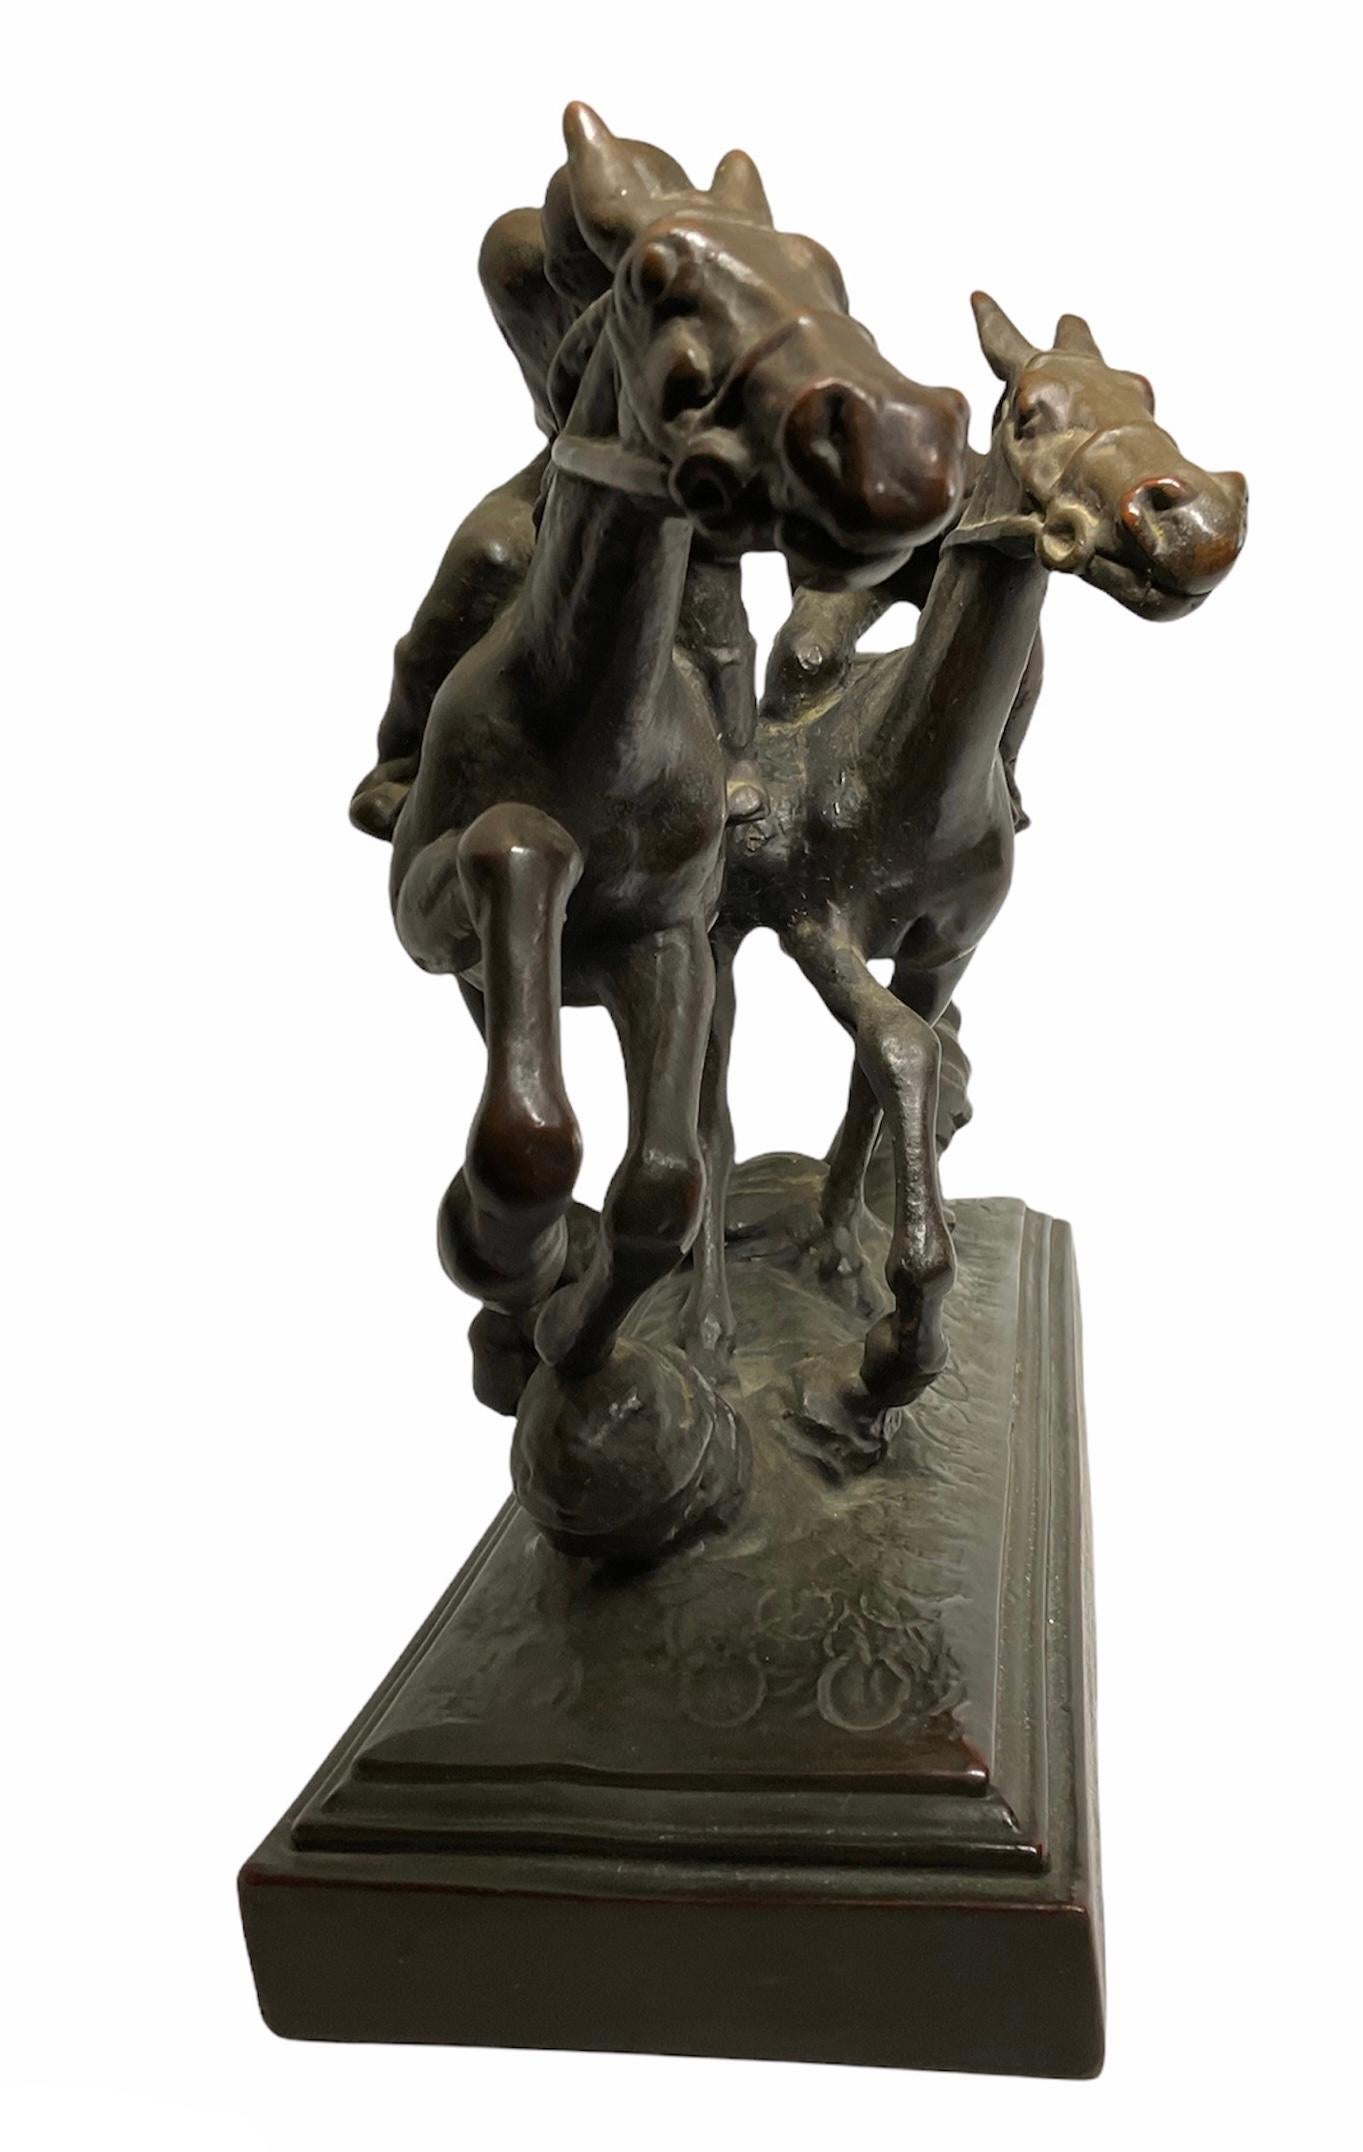 Victorian Paul Herzel Patinated Bronze Sculpture of “Hot-Blooded”Horses